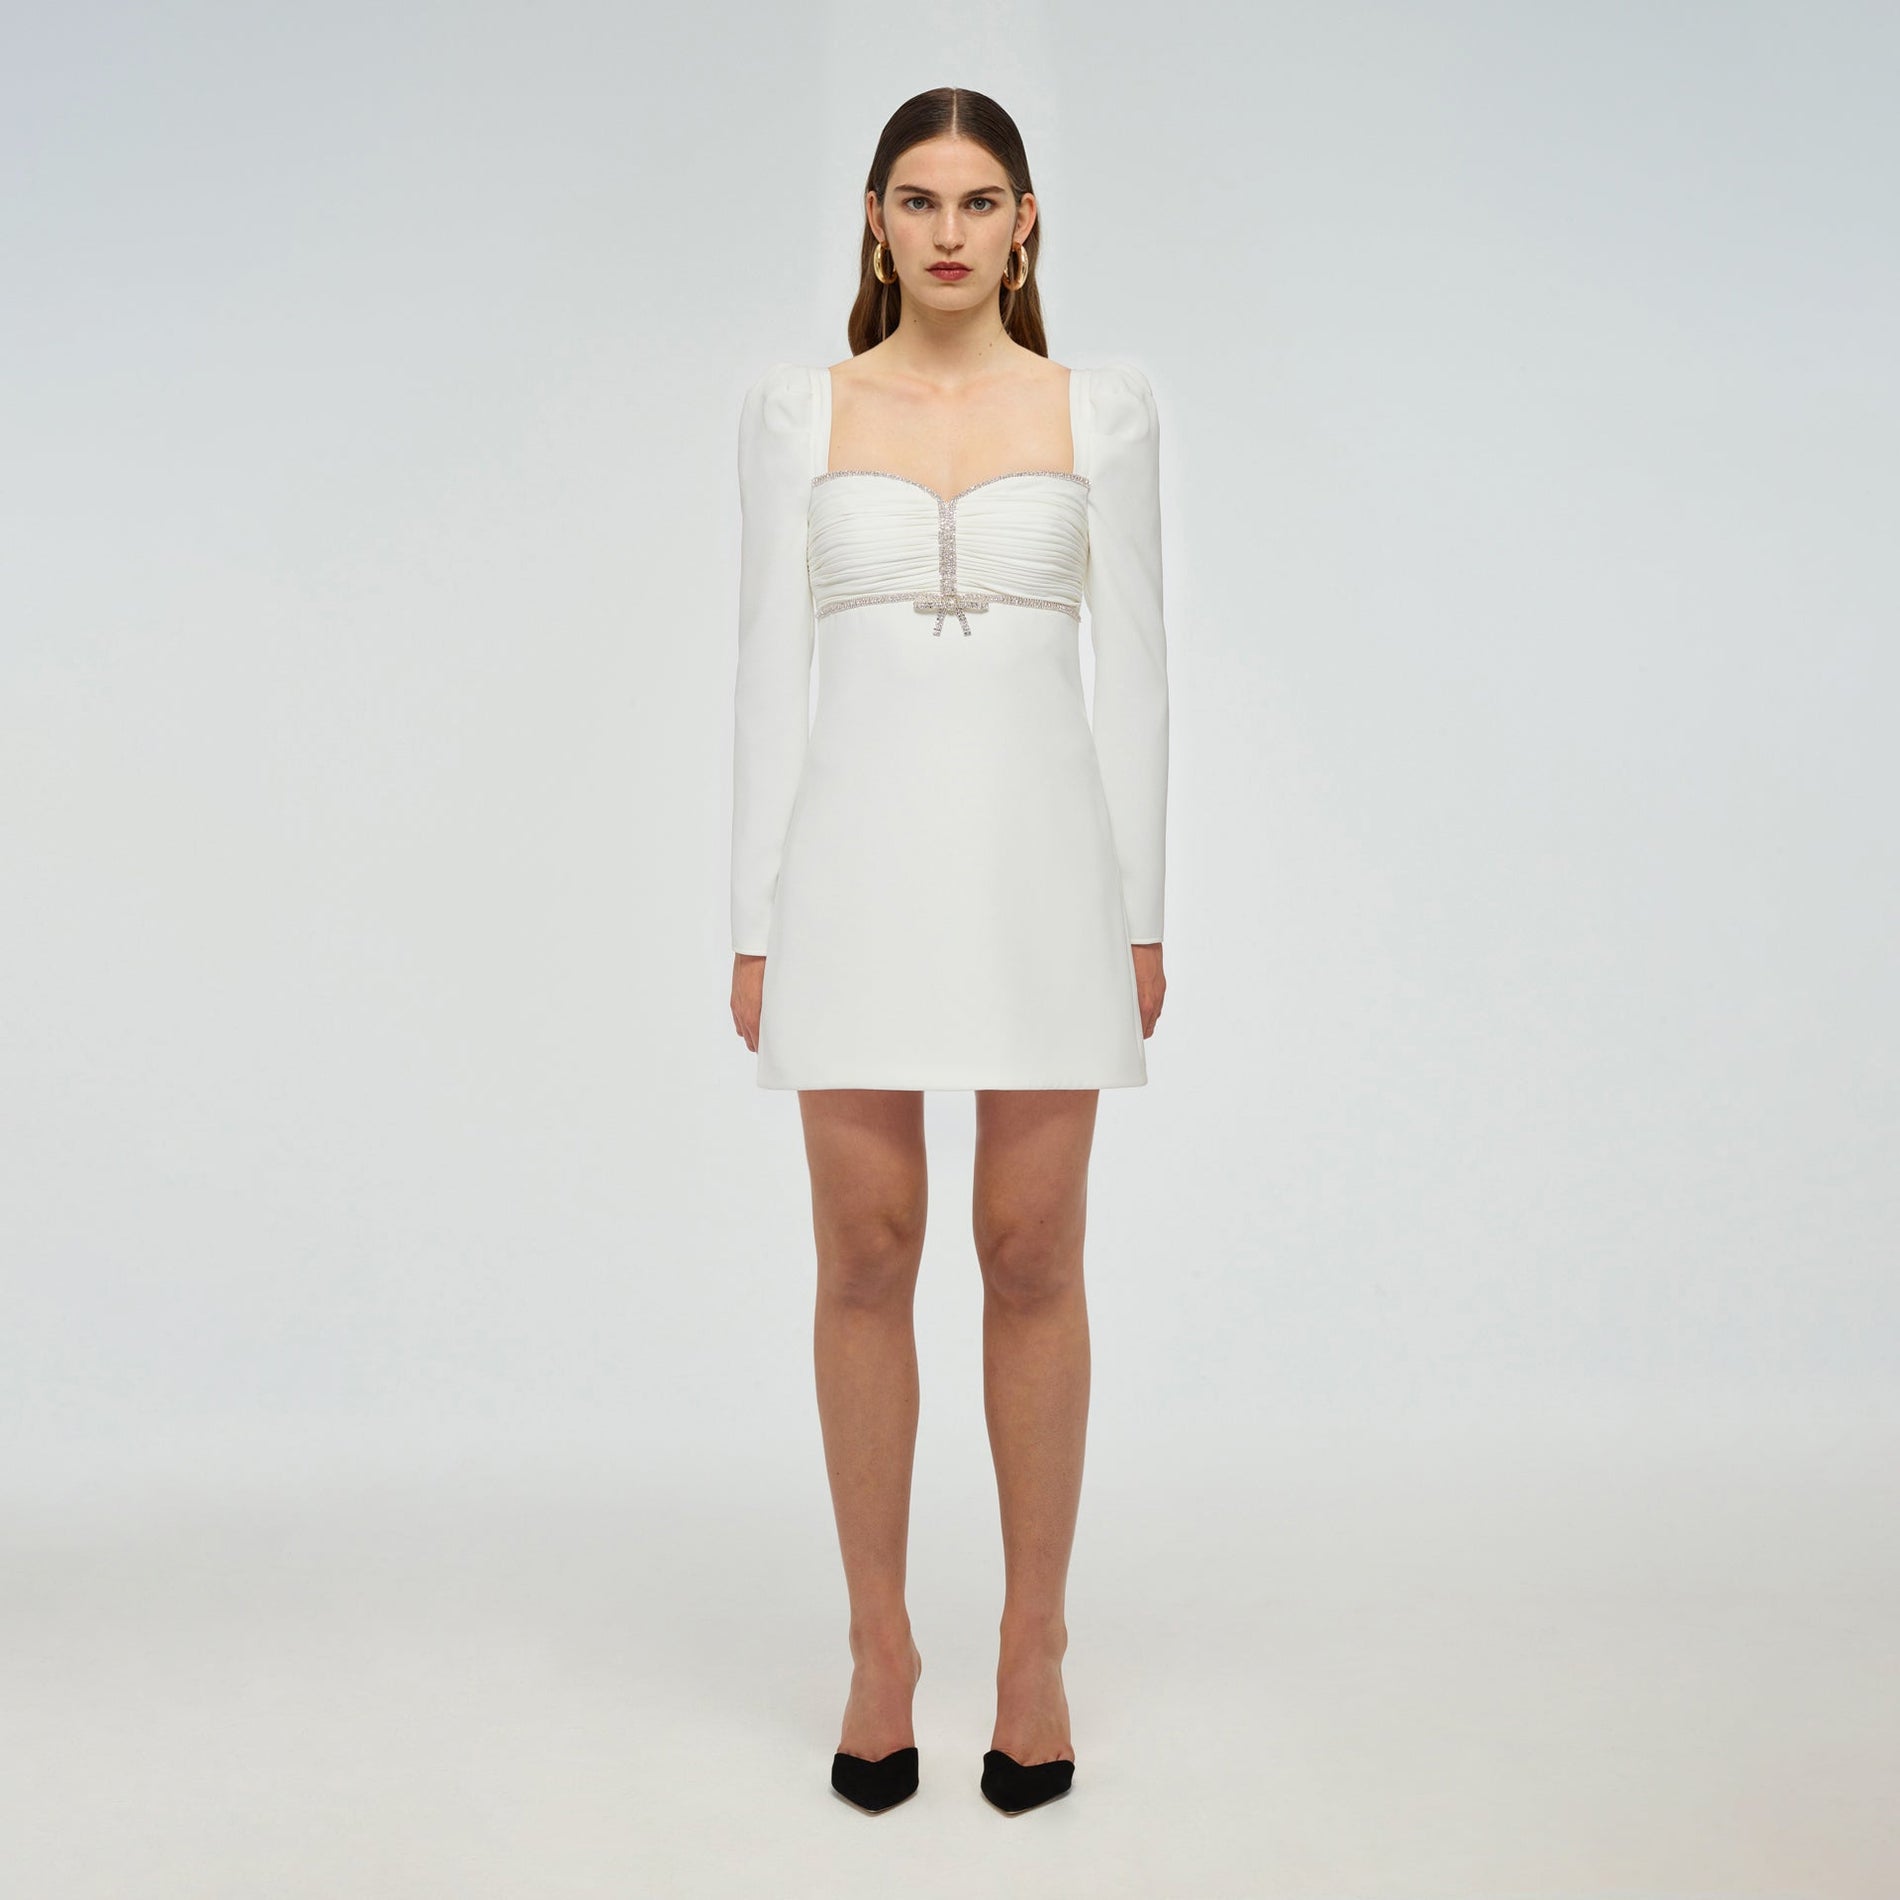 A woman wearing the White Crepe Diamante Mini Dress